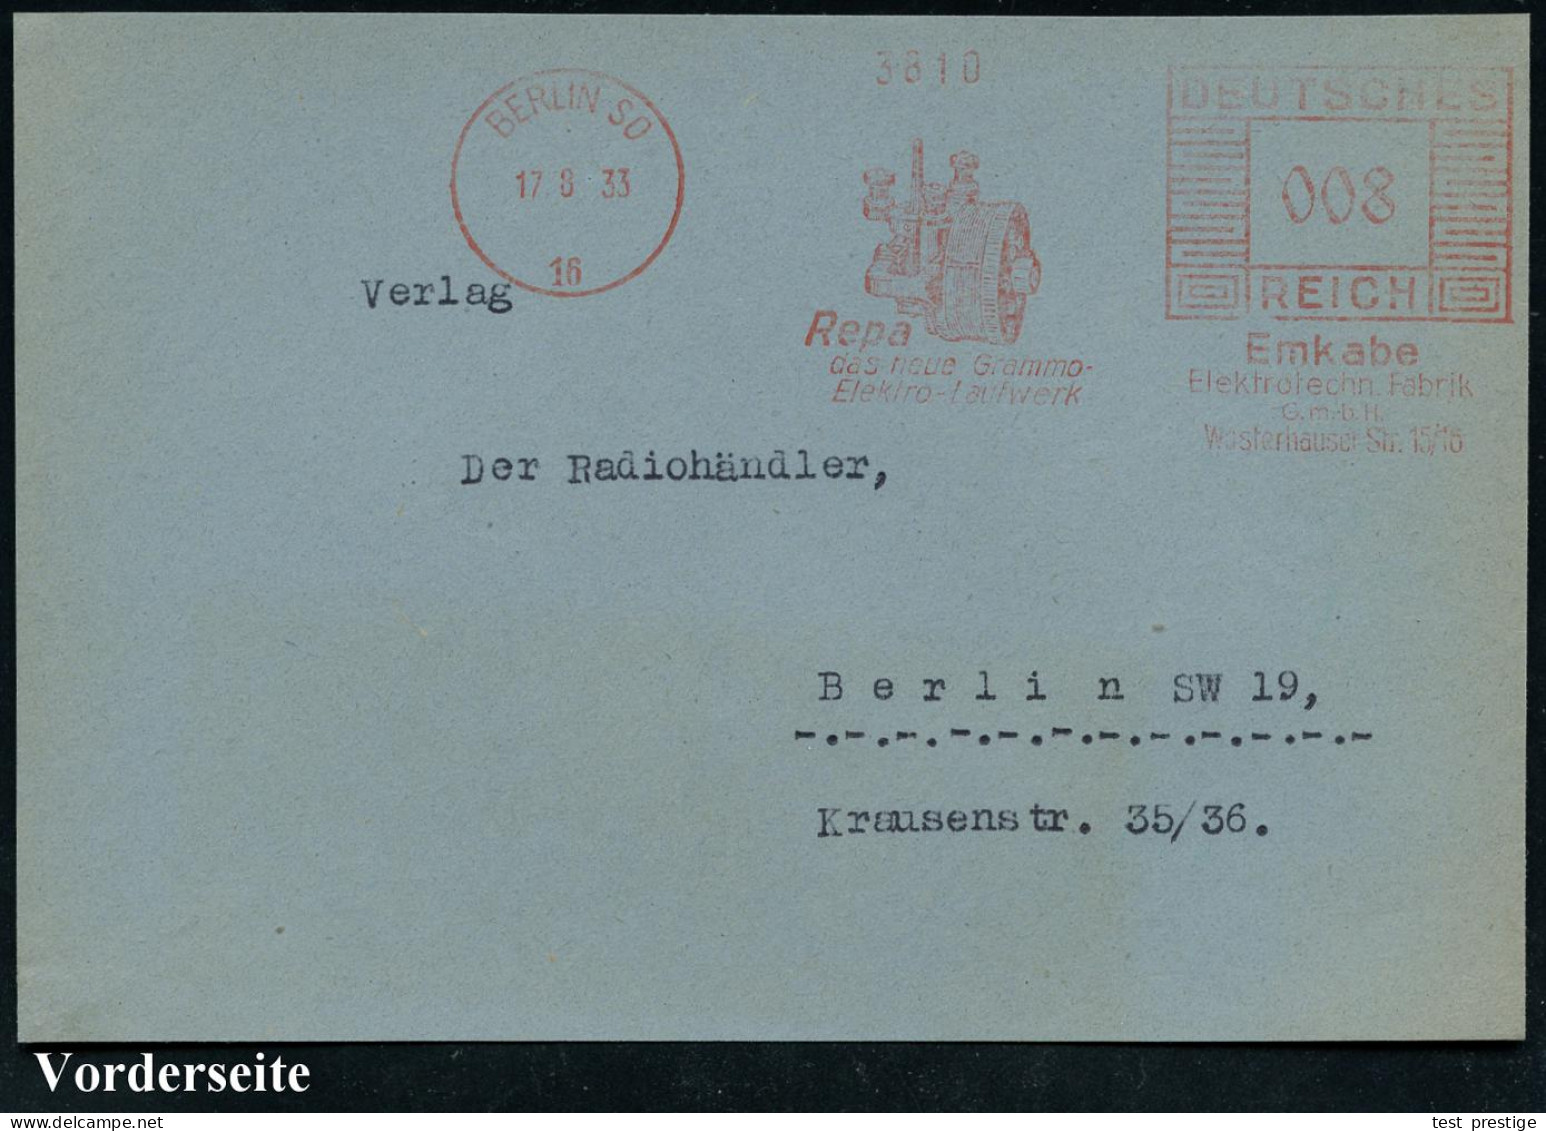 BERLIN SO/ 16/ Repa/ Das Neue Grammo-/ Elektro-Laufwerk/ Emkabe.. 1933 (17.8.) AFS Francotyp (= Grammofon-Laufwerk) Beda - Music